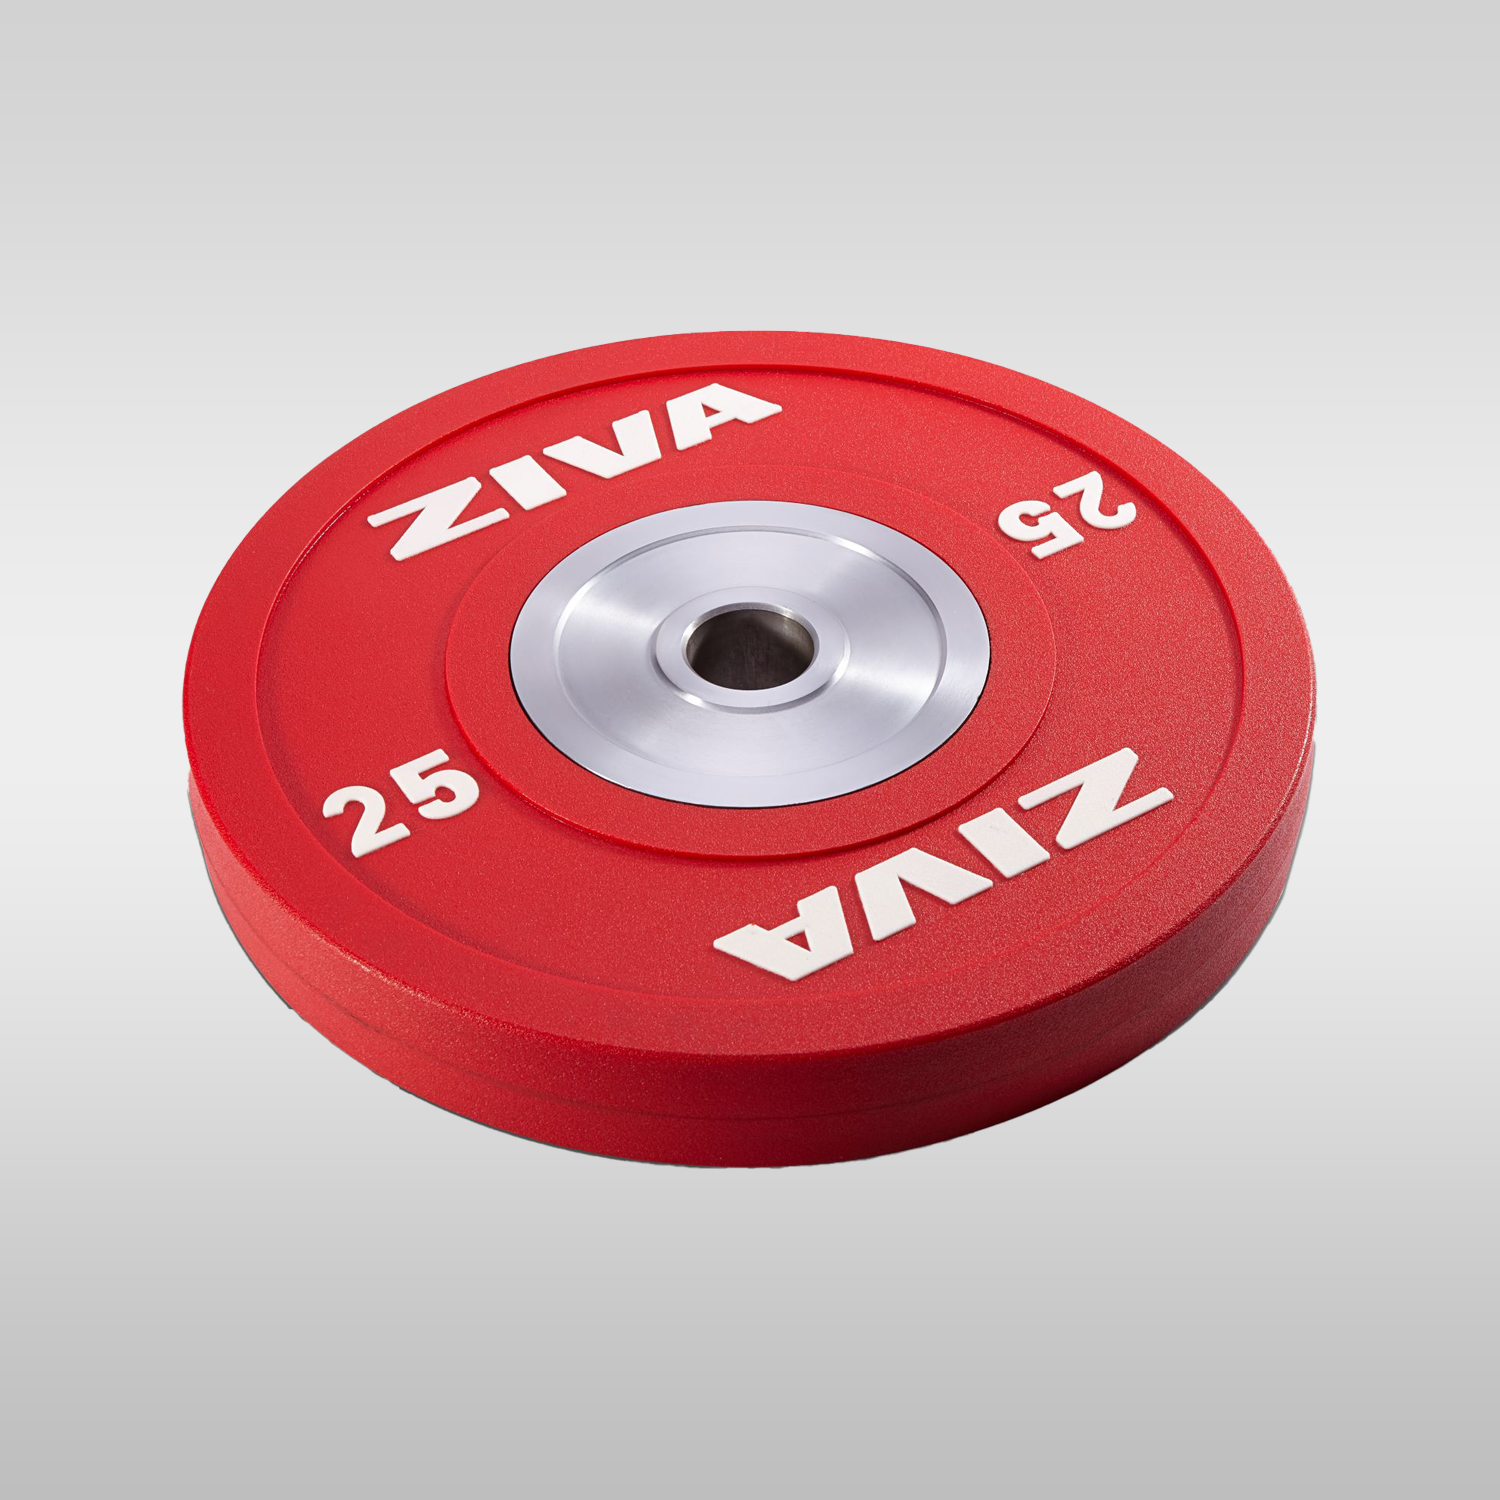 ZIVA Urethane Competition Bumper Discs